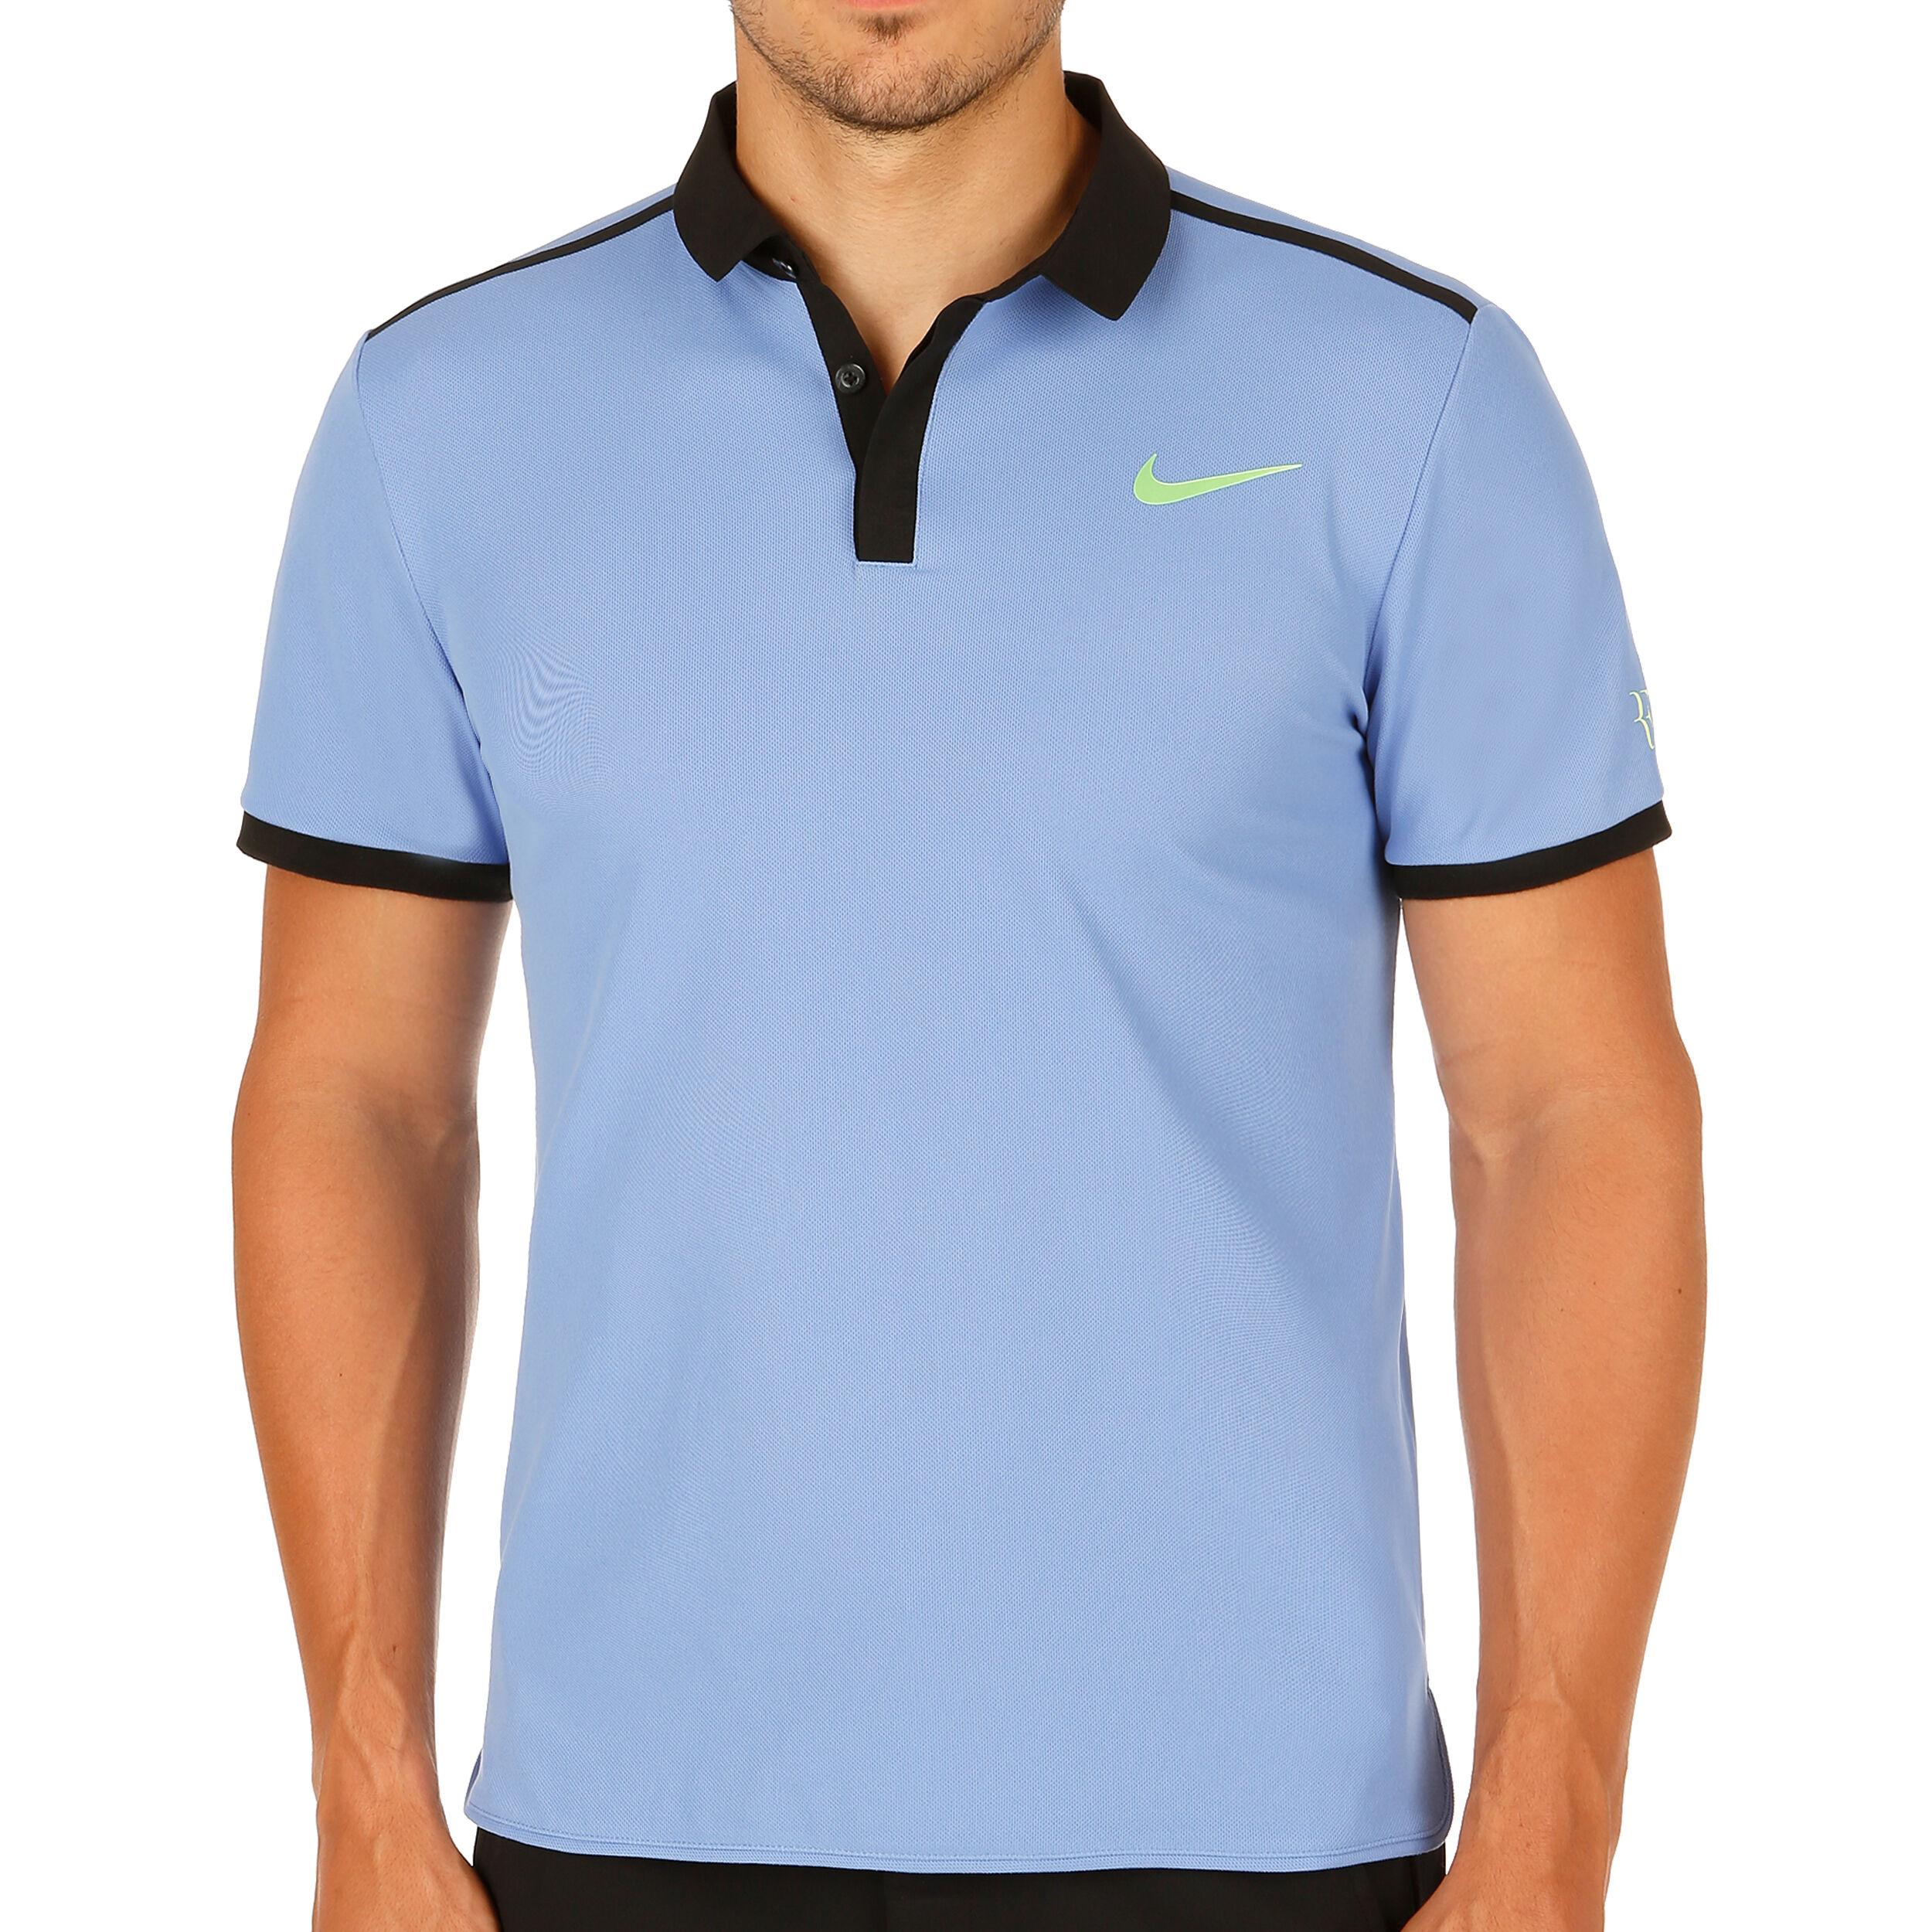 Nike Roger Federer Advantage Polo Uomini - Blu Chiaro, Nero compra online |  Tennis-Point